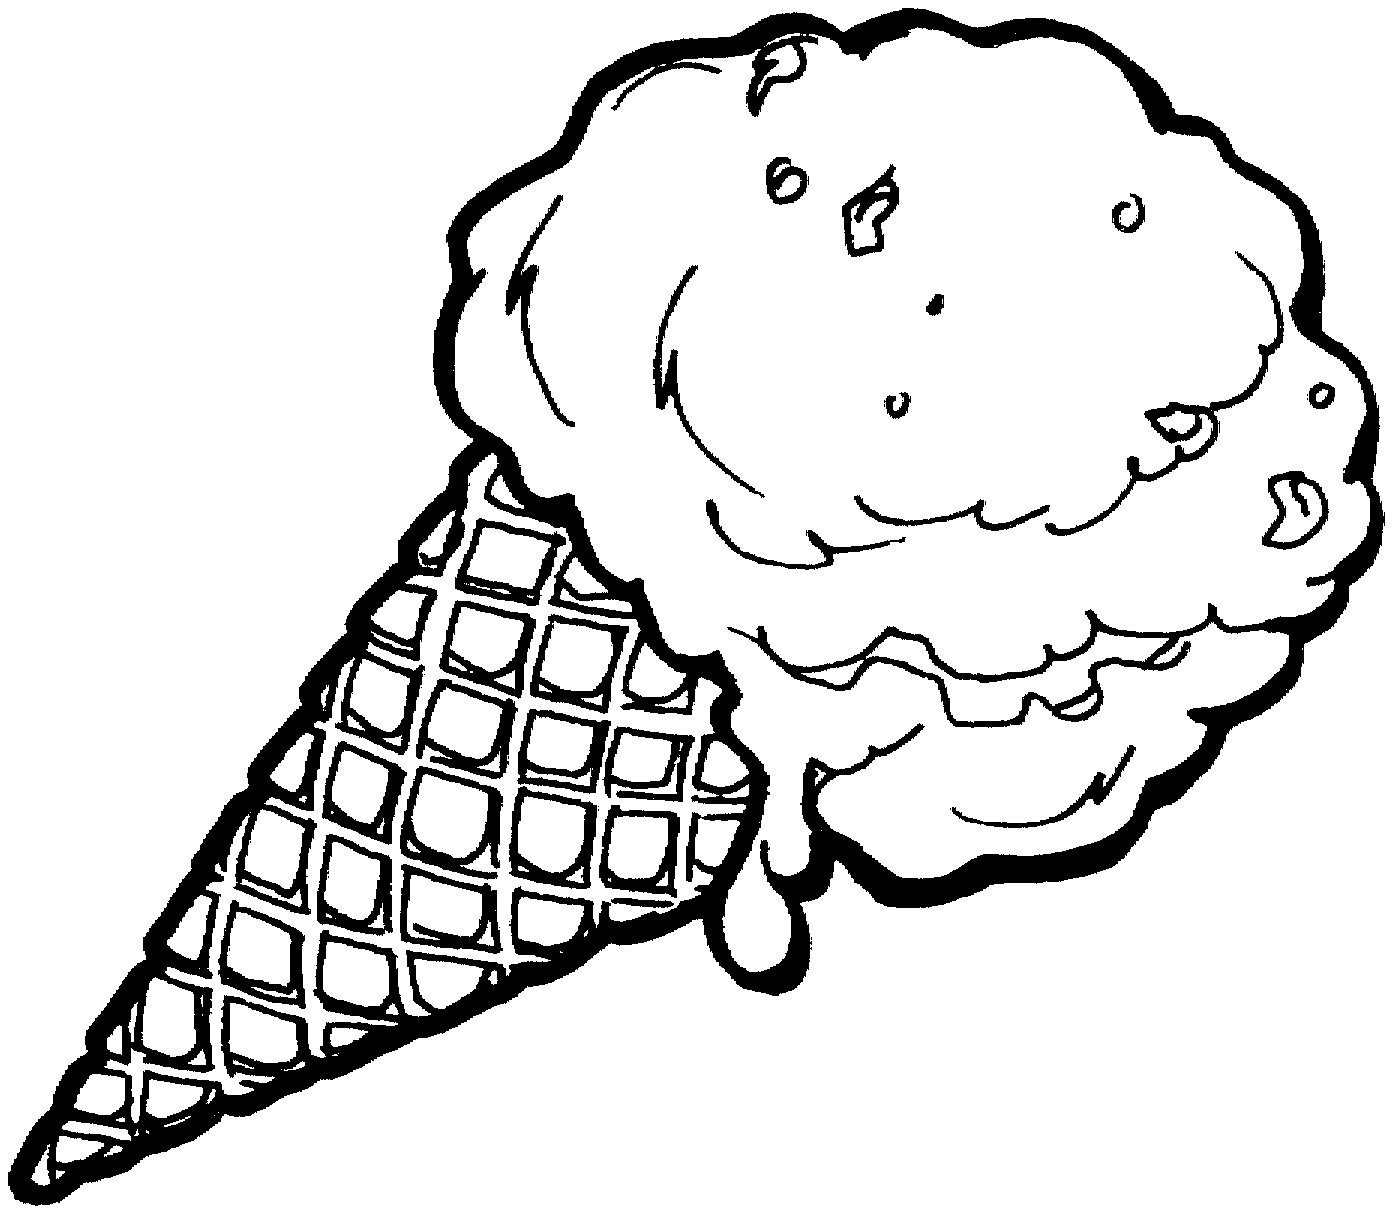 ice cream sundae clipart black and white - photo #23